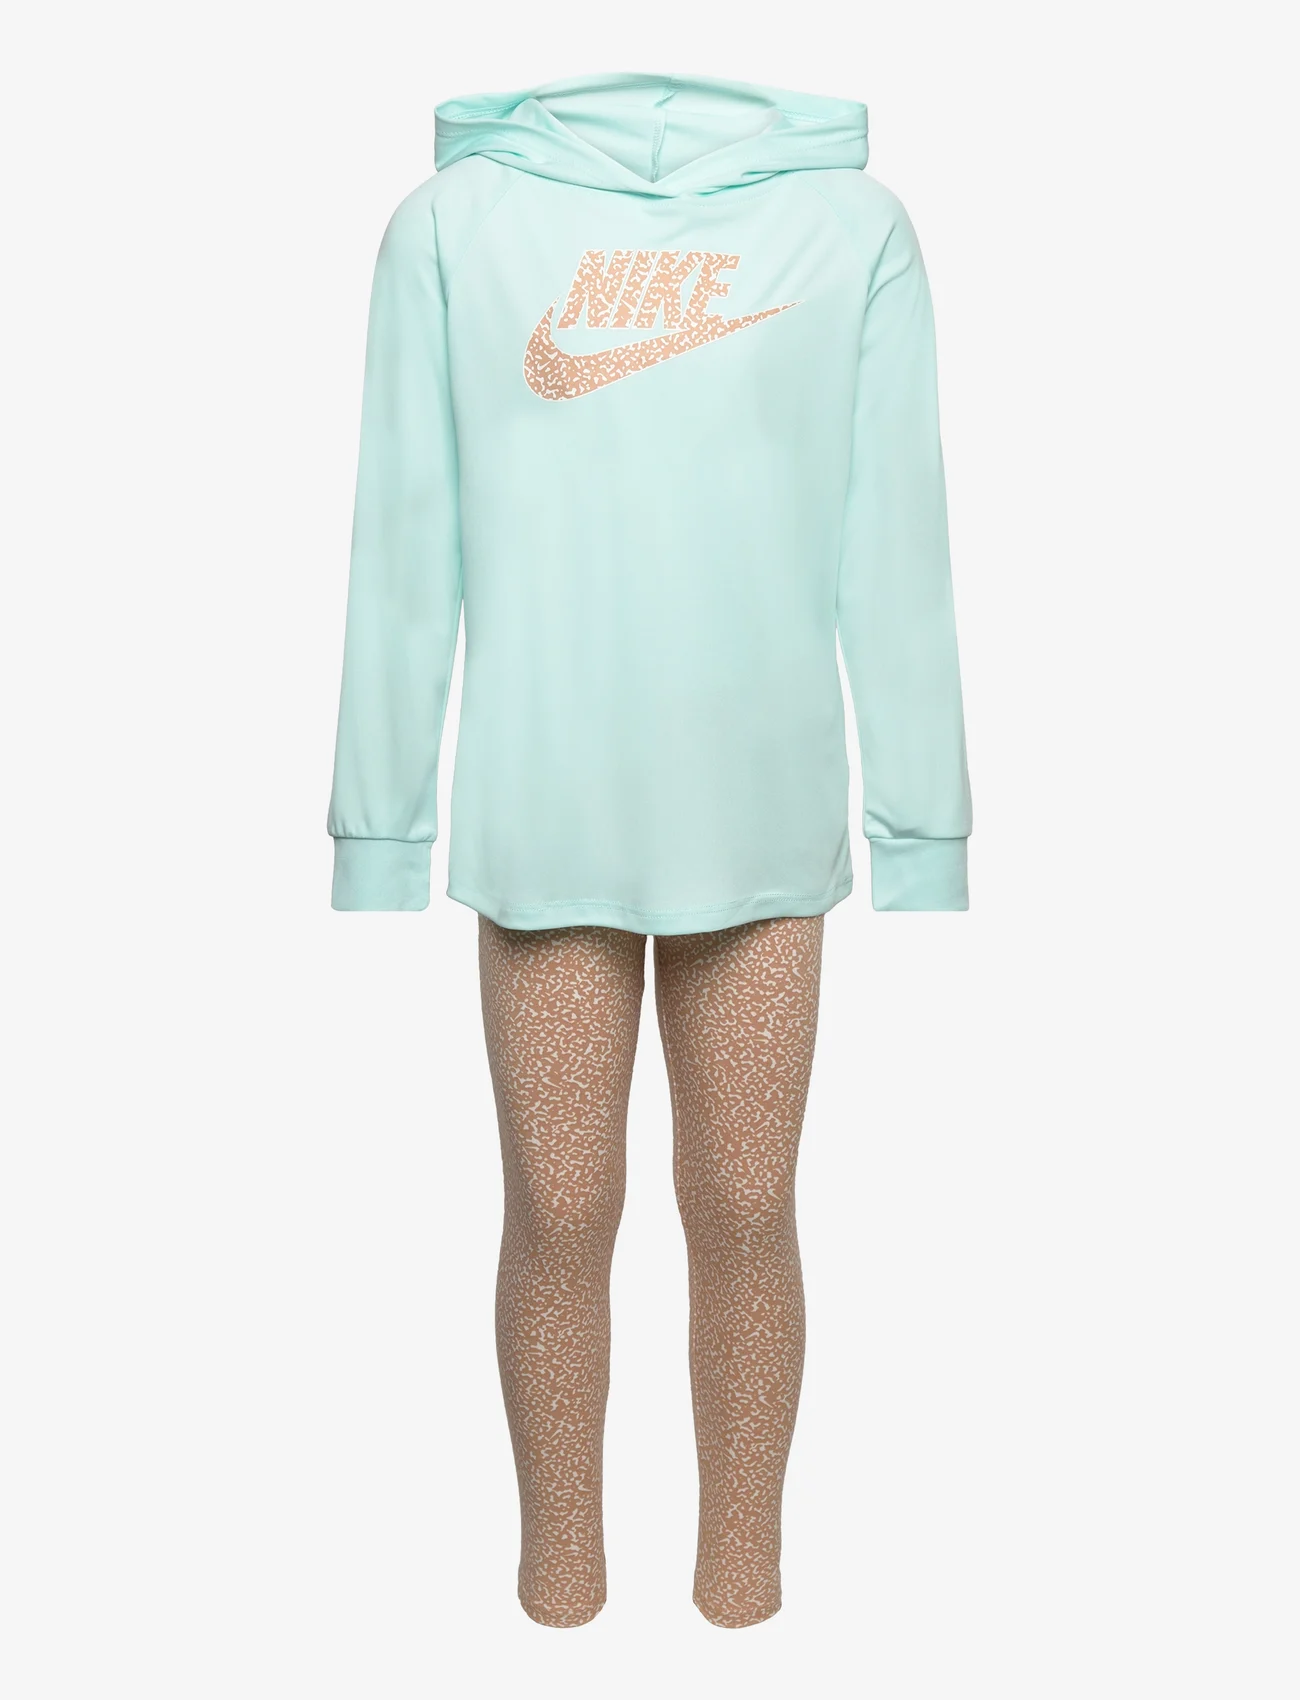 Nike - NOTEBOOK DRI-FIT LEGGING SET / NOTEBOOK DRI-FIT LEGGING SET - sets mit langärmeligem t-shirt - hemp - 0